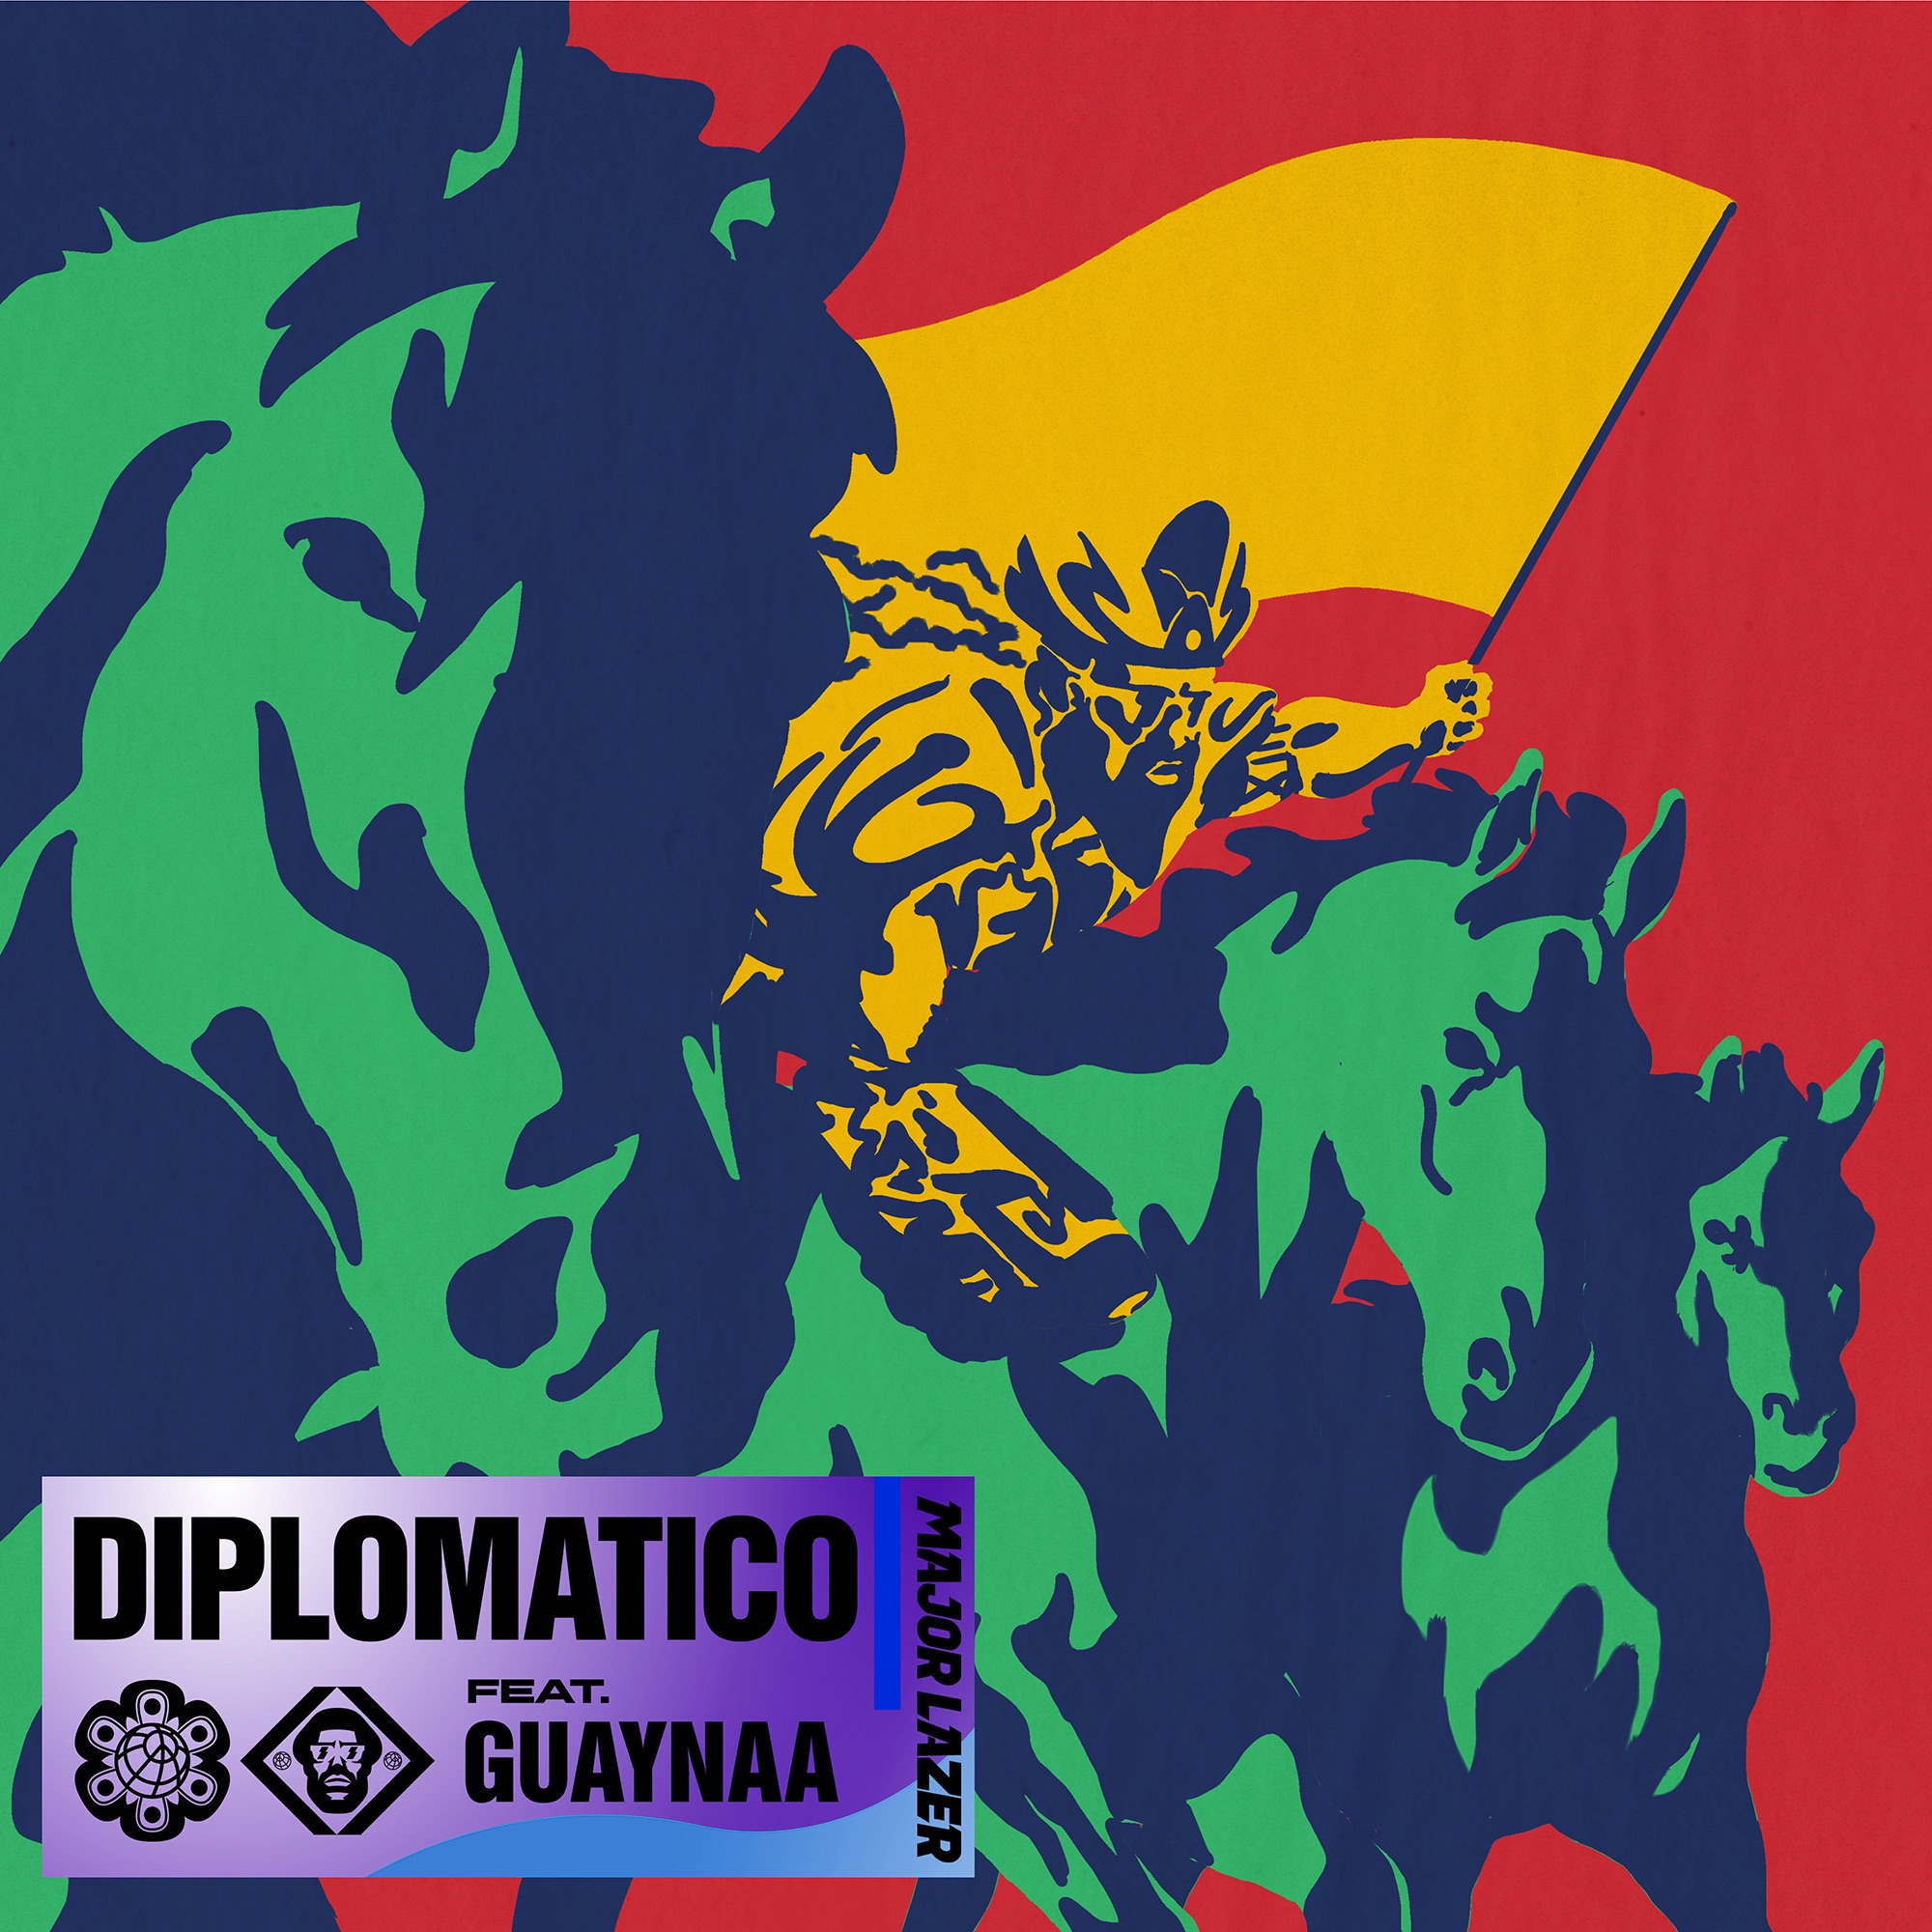 Major Lazer - Diplomatico (feat. Guaynaa) - Single